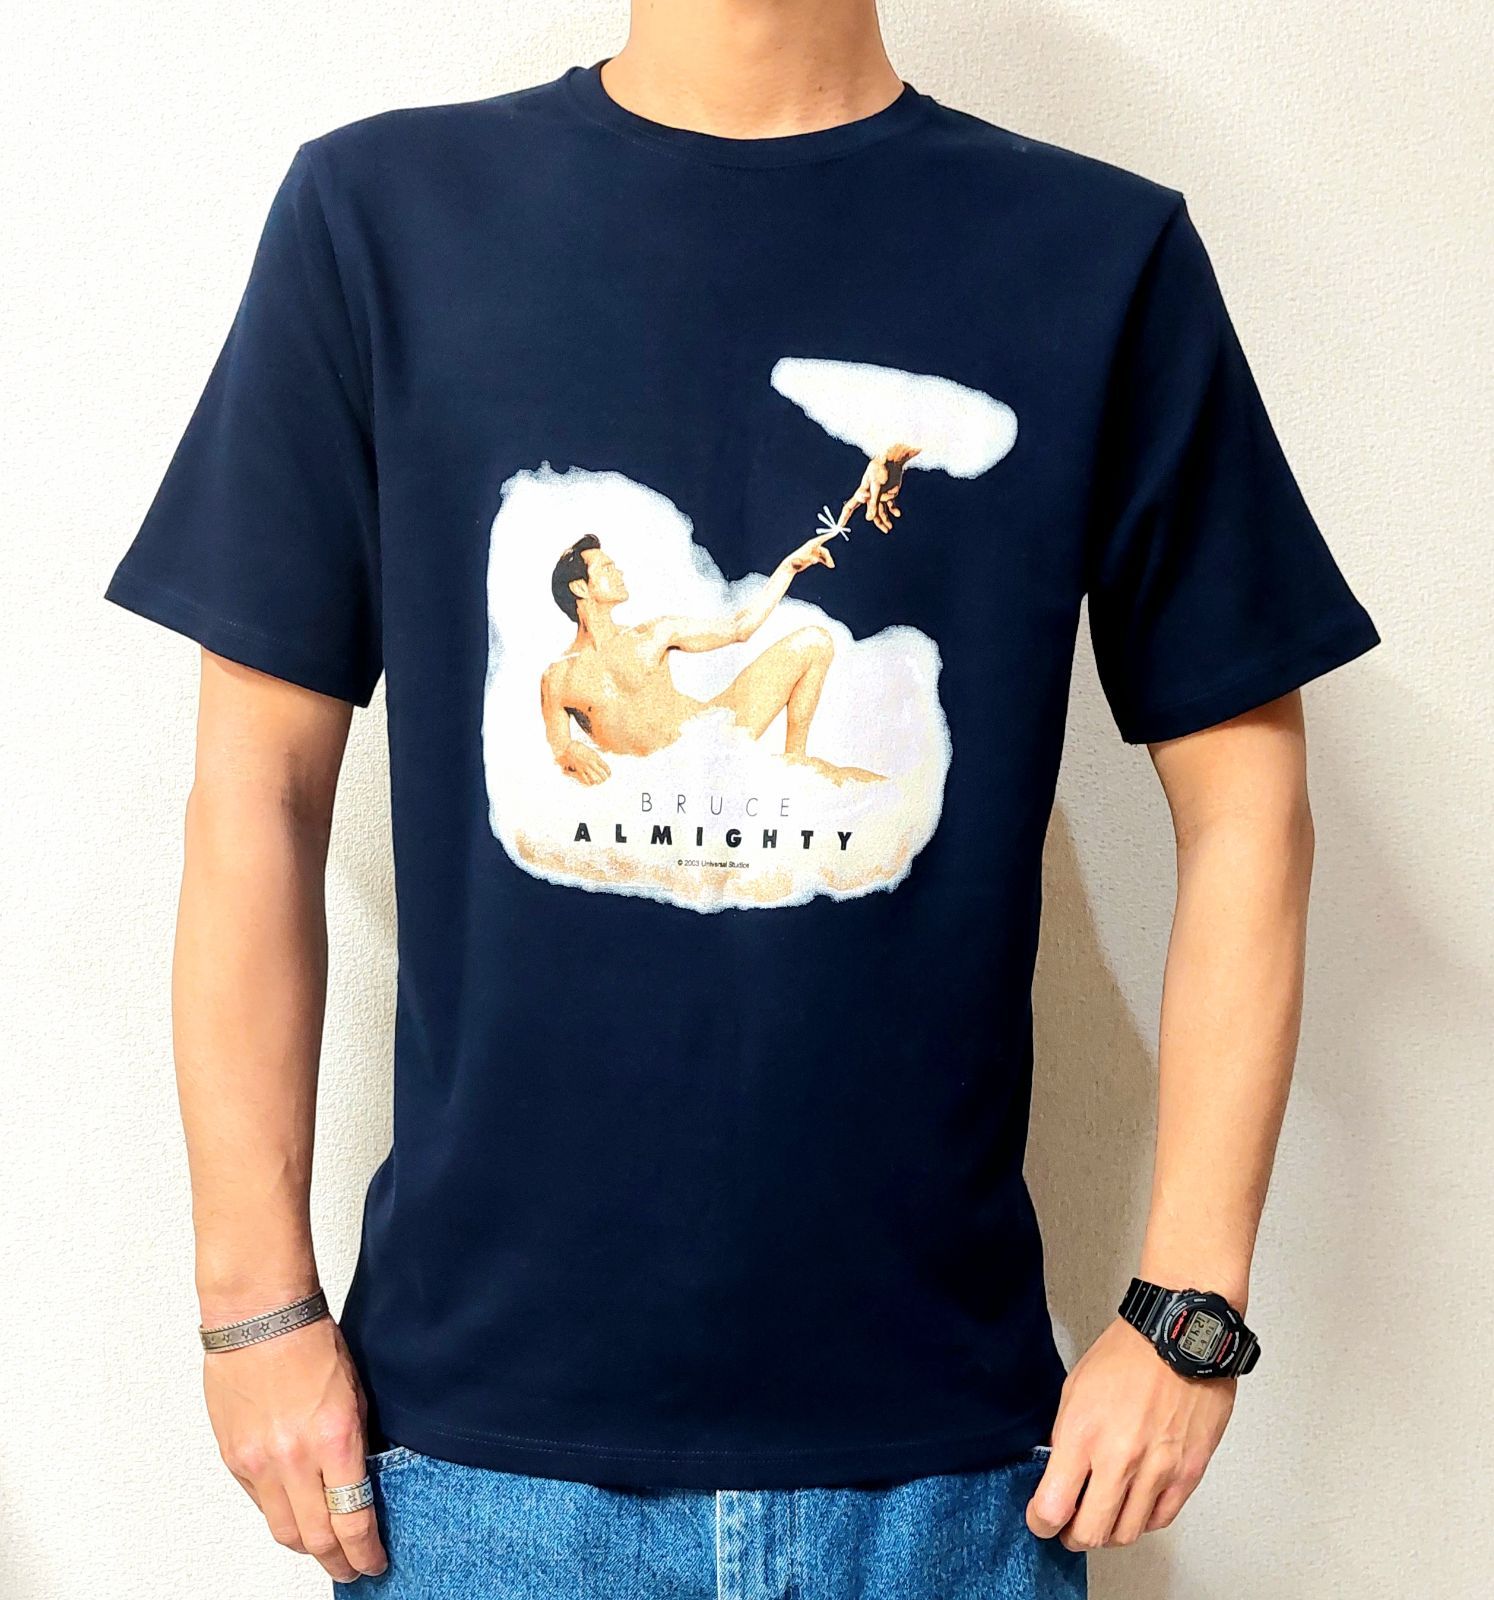 00's BRUCE ALMIGHTY プロモ Tシャツ ジムキャリー XL - メルカリ